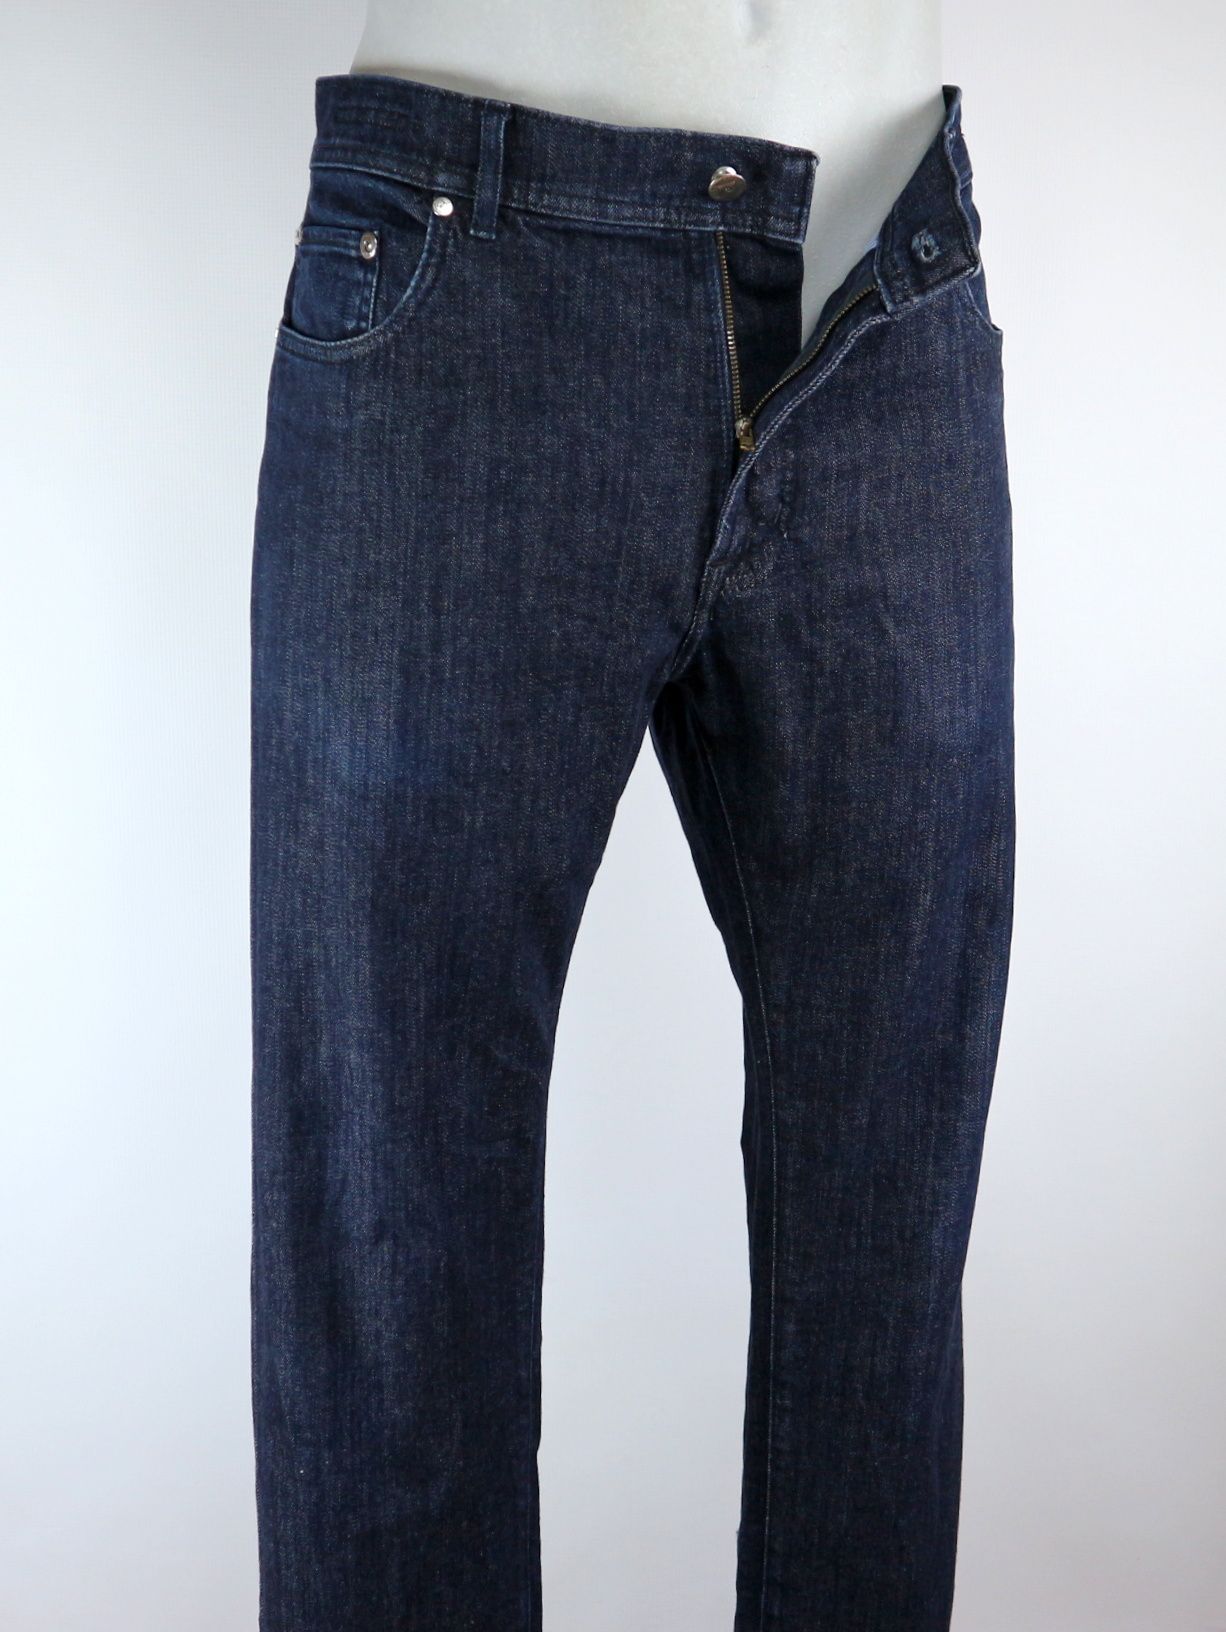 Pierre Cardin Pierre Cardin Lyon Fit jeans W38 L32 Size US 38 / EU 54 - 2 Preview